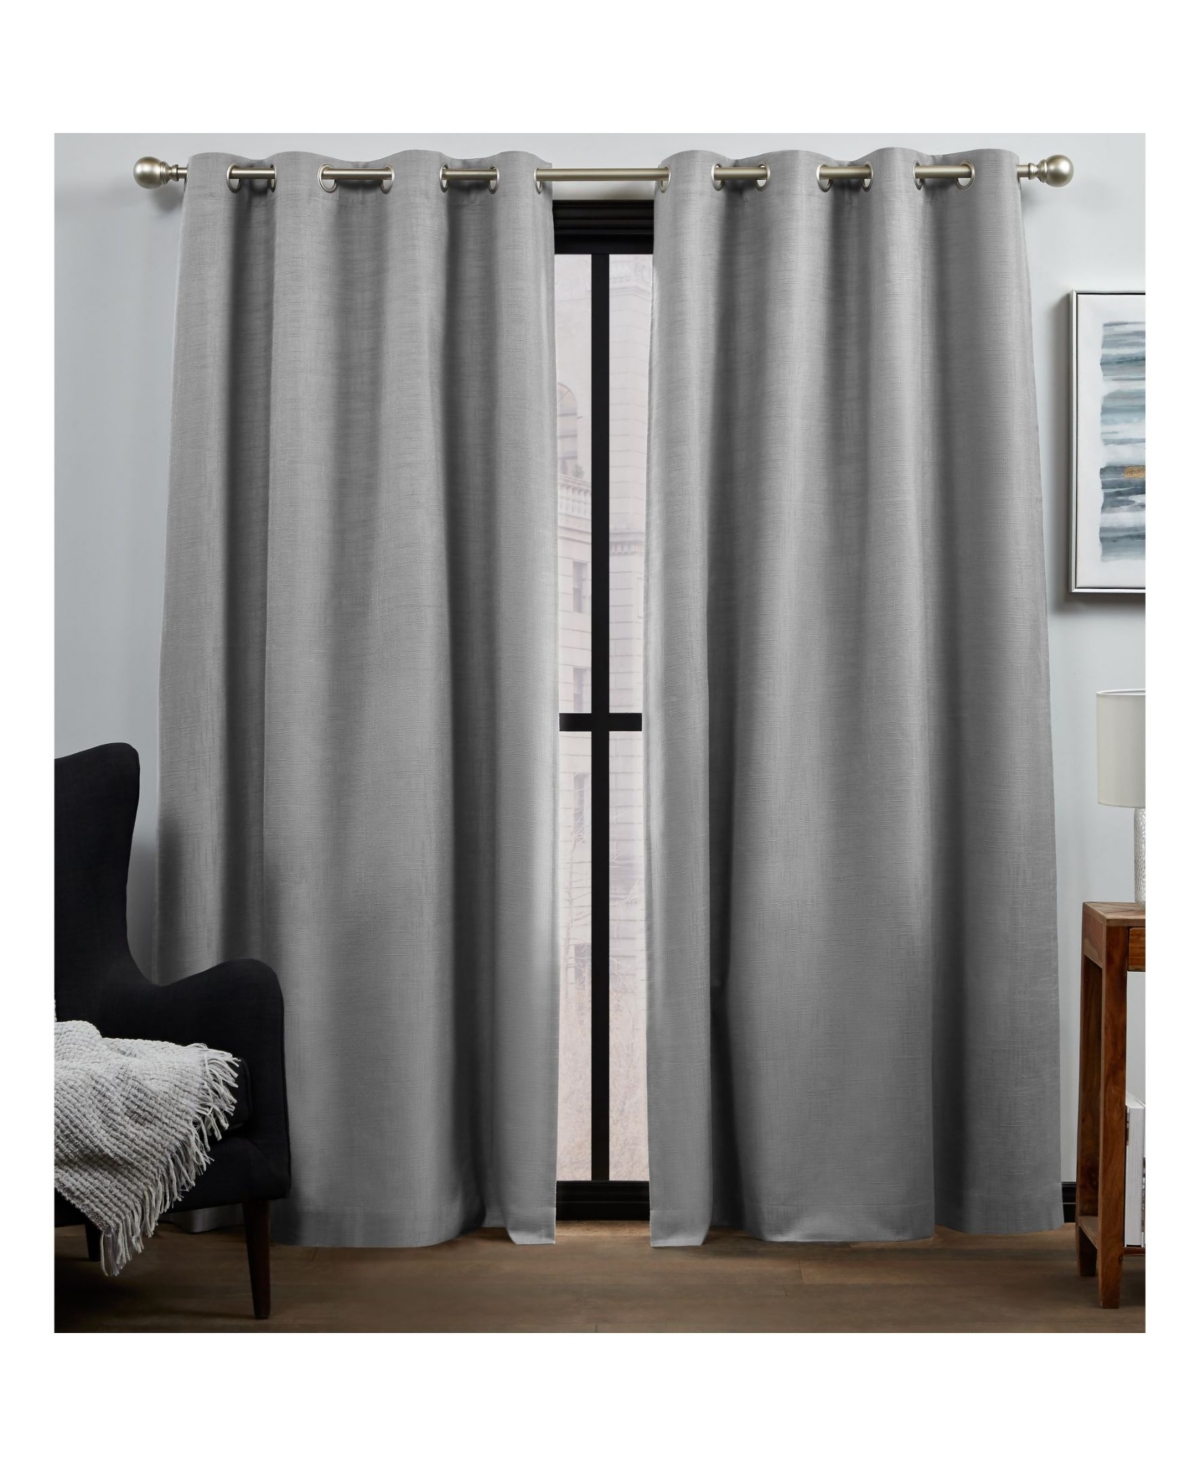 Curtains Bensen Blackout Grommet Top Curtain Panel Pair, 52" x 96", Set of 2 - Dark Gray